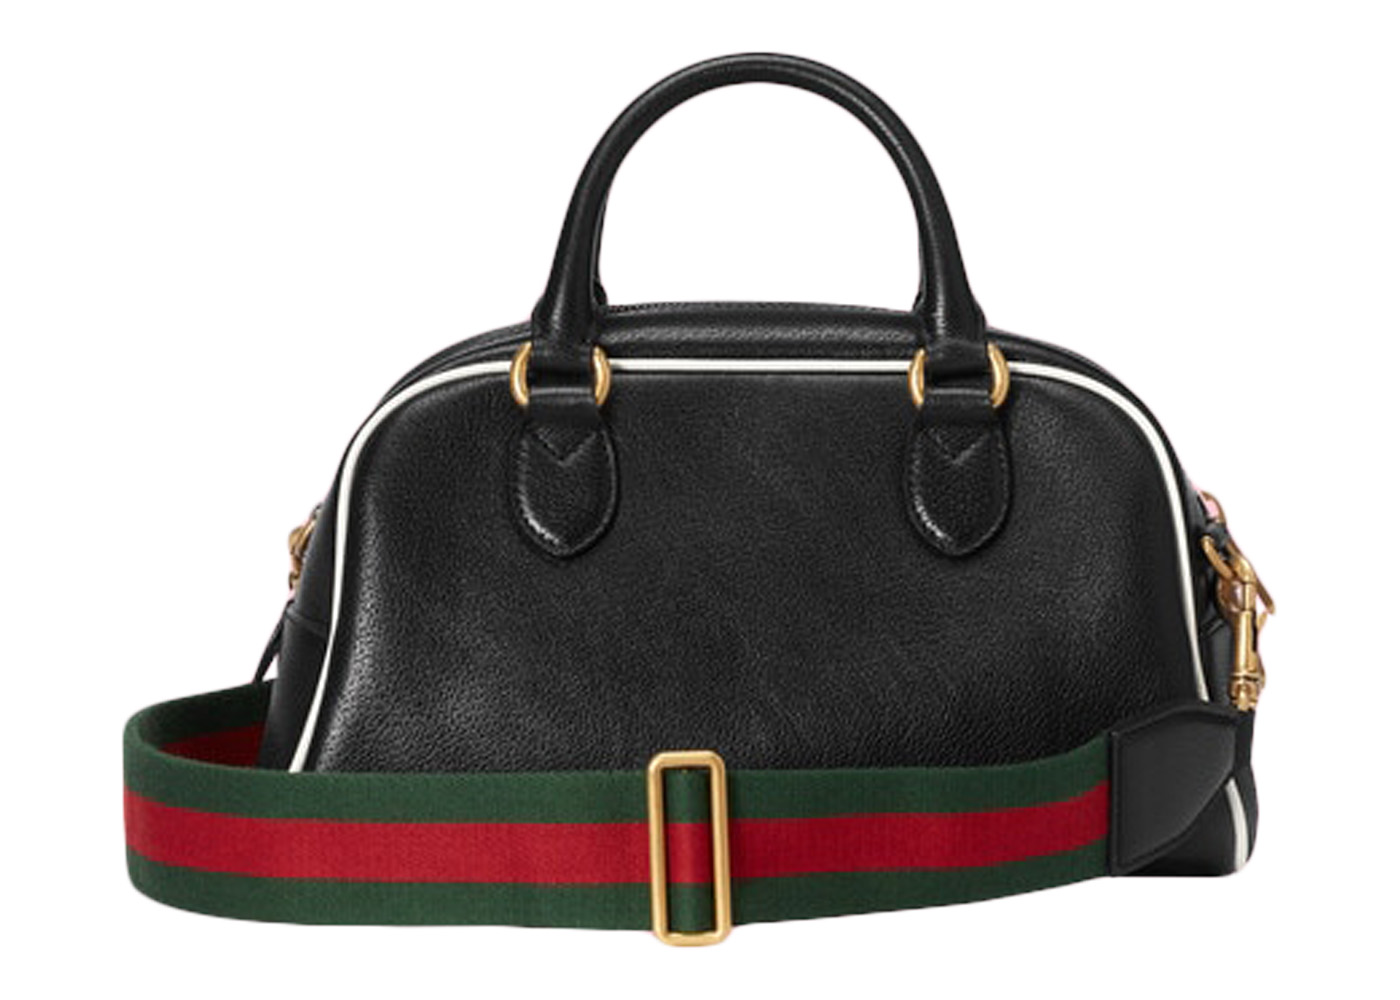 Gucci x adidas Mini Duffle Bag Black in Leather with Gold-tone - GB